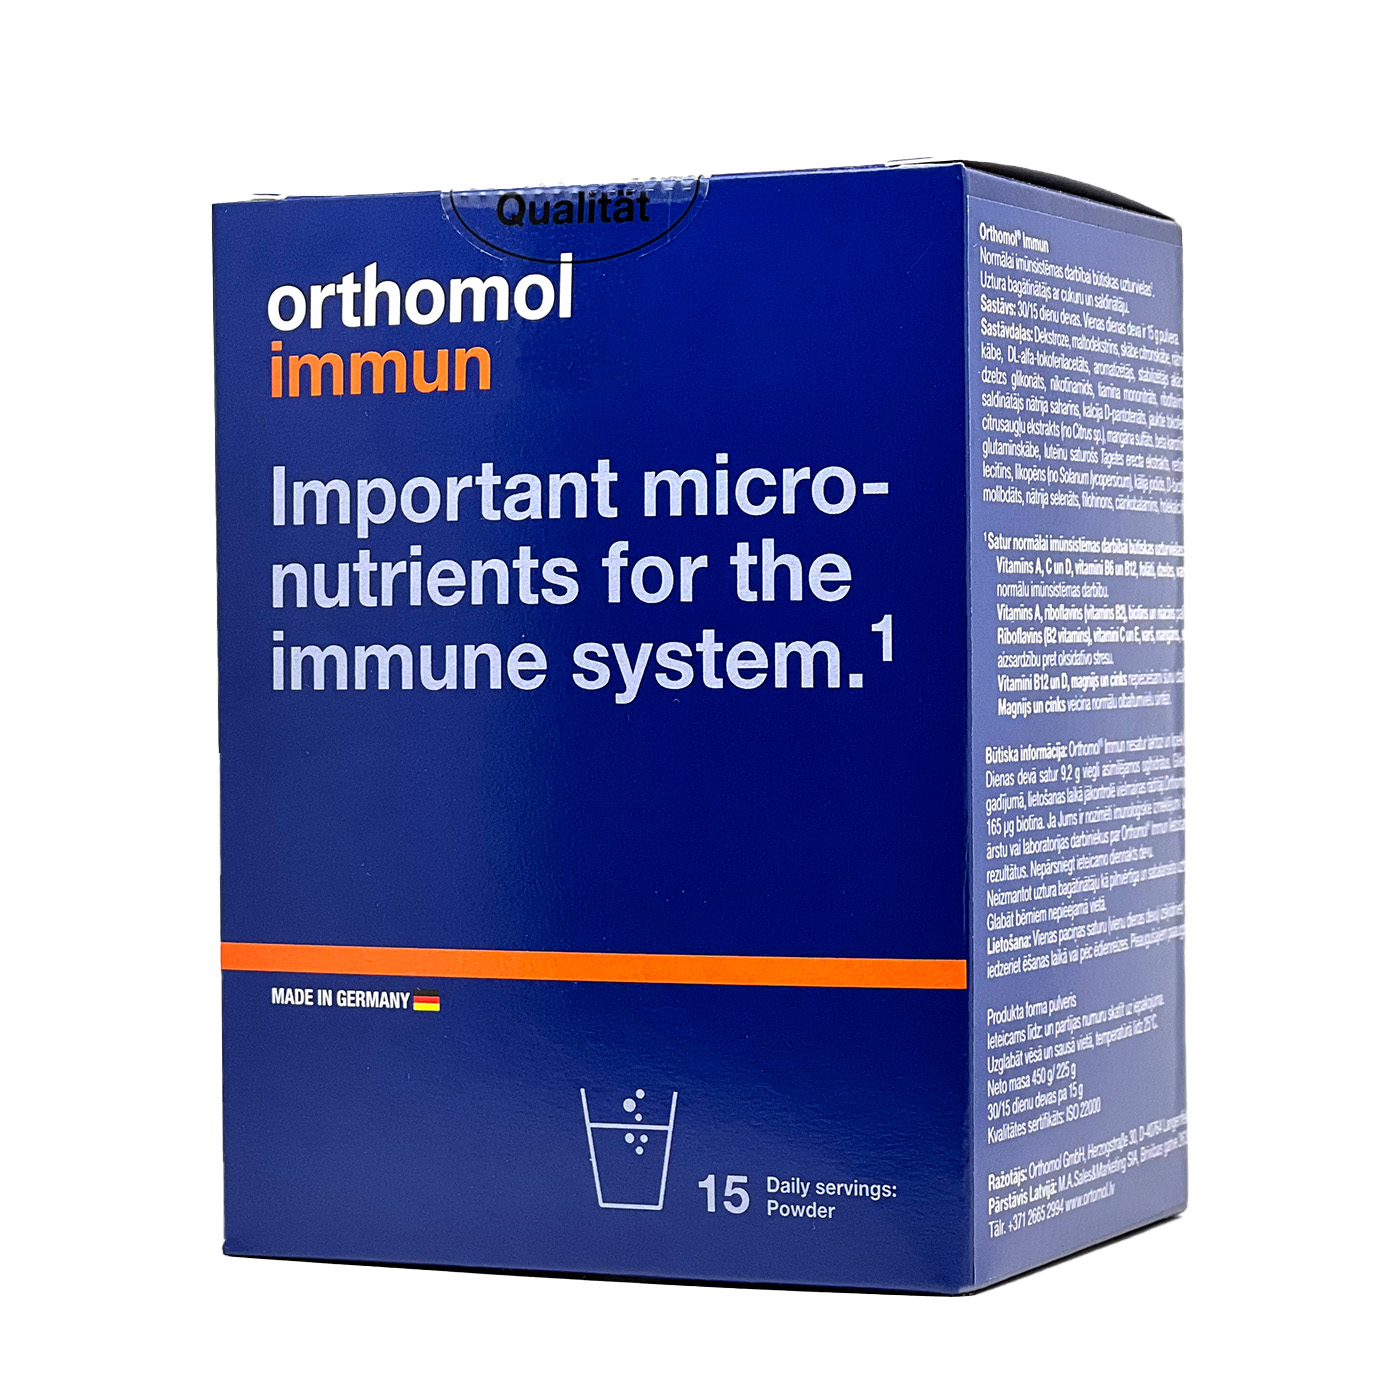 Orthomol immun 15 dienu devas